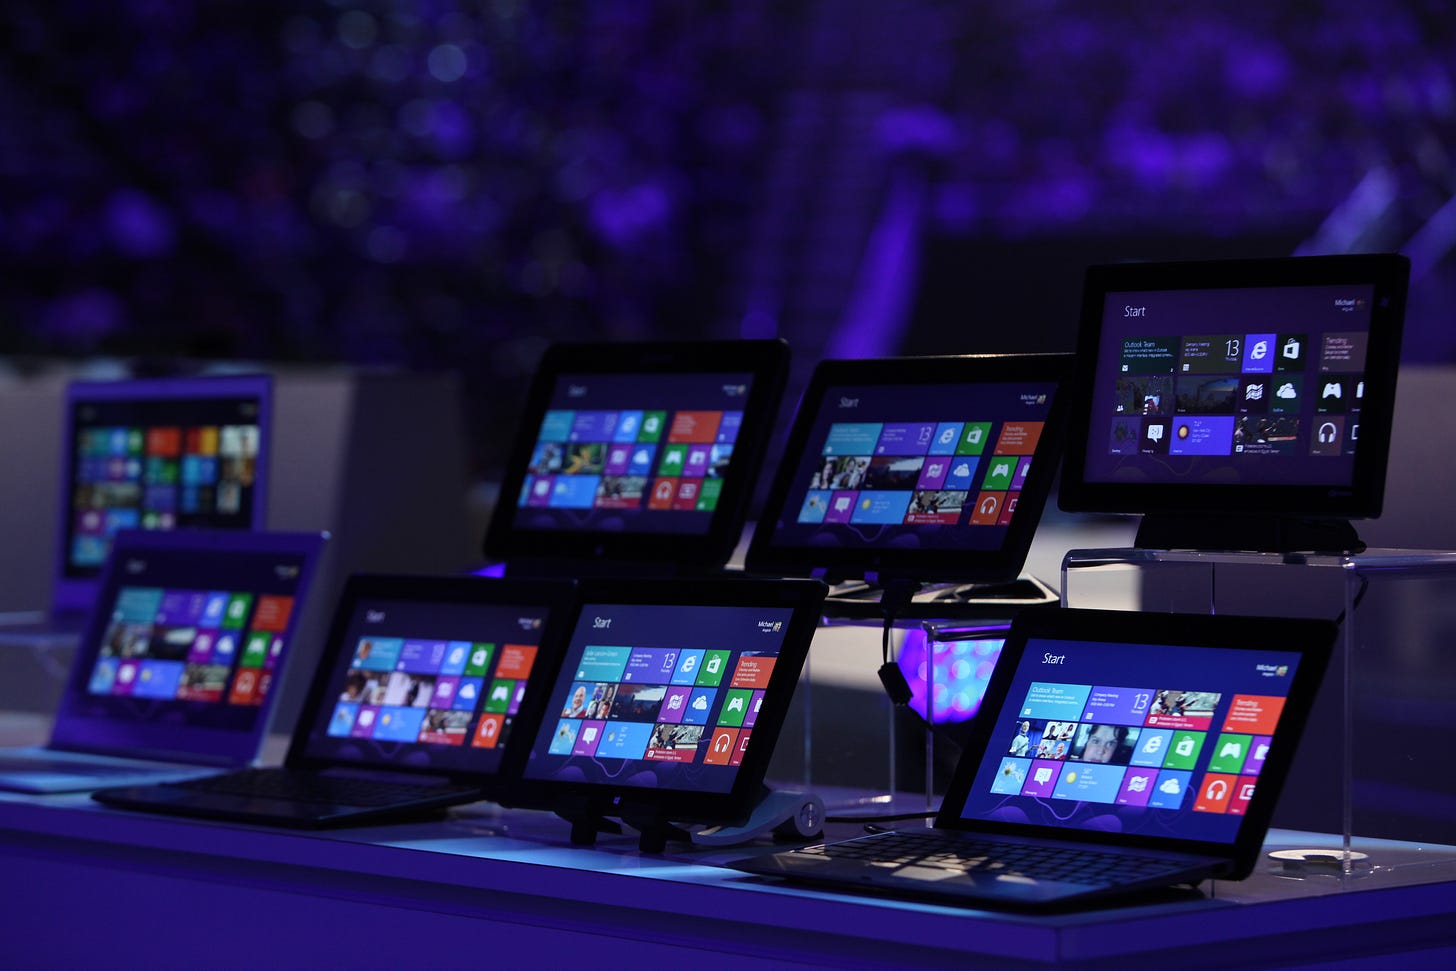 8 screens showing the Windows 8 start screen